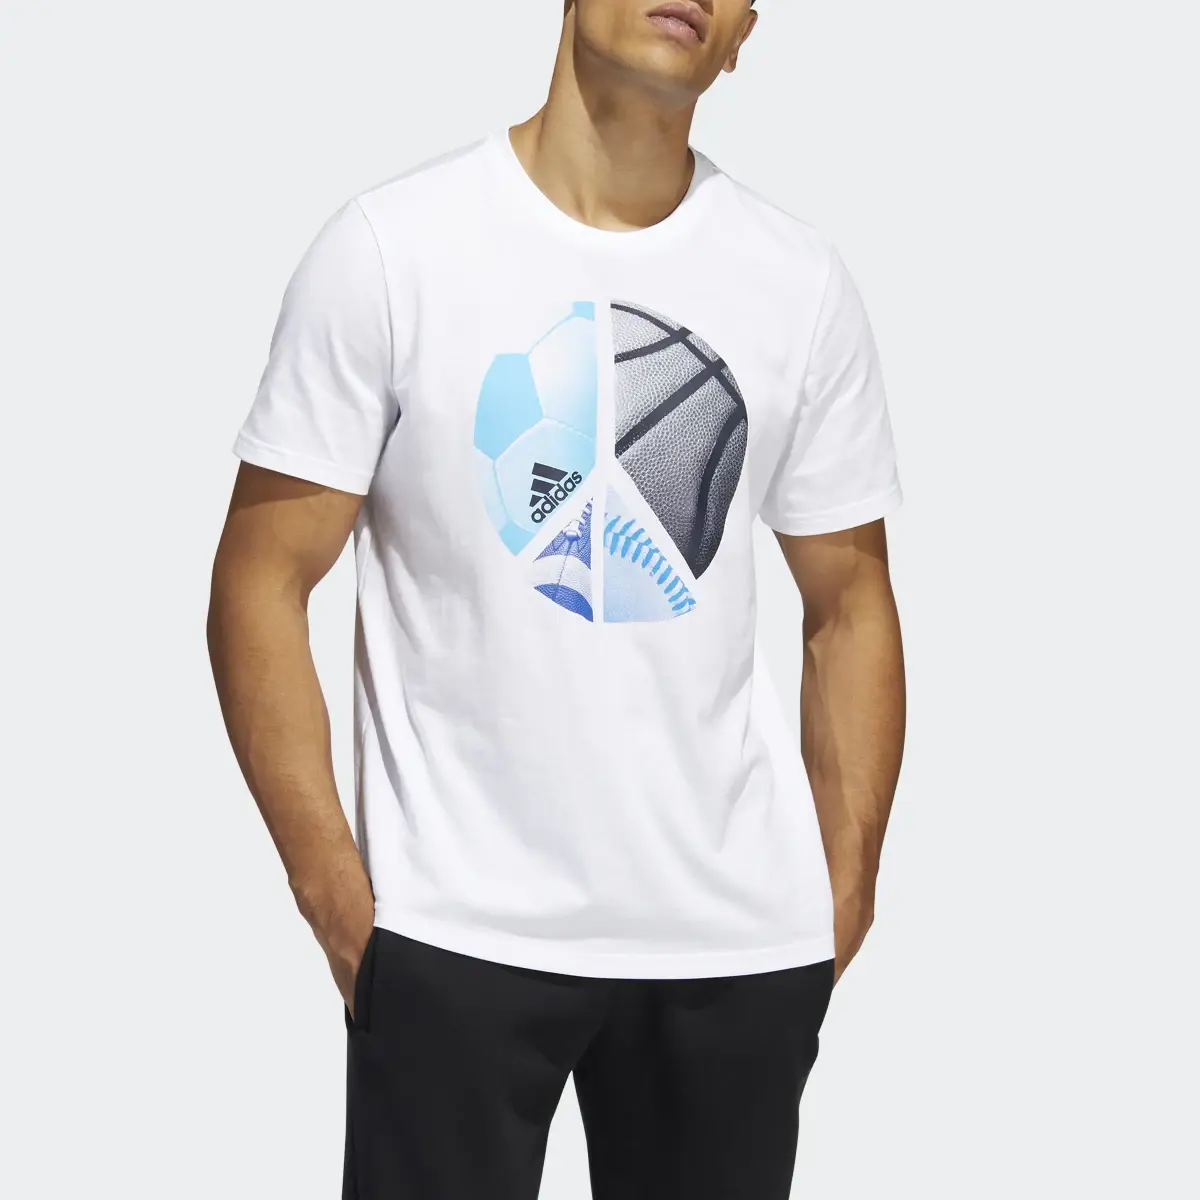 Adidas T-shirt Multiplicity Graphic. 1